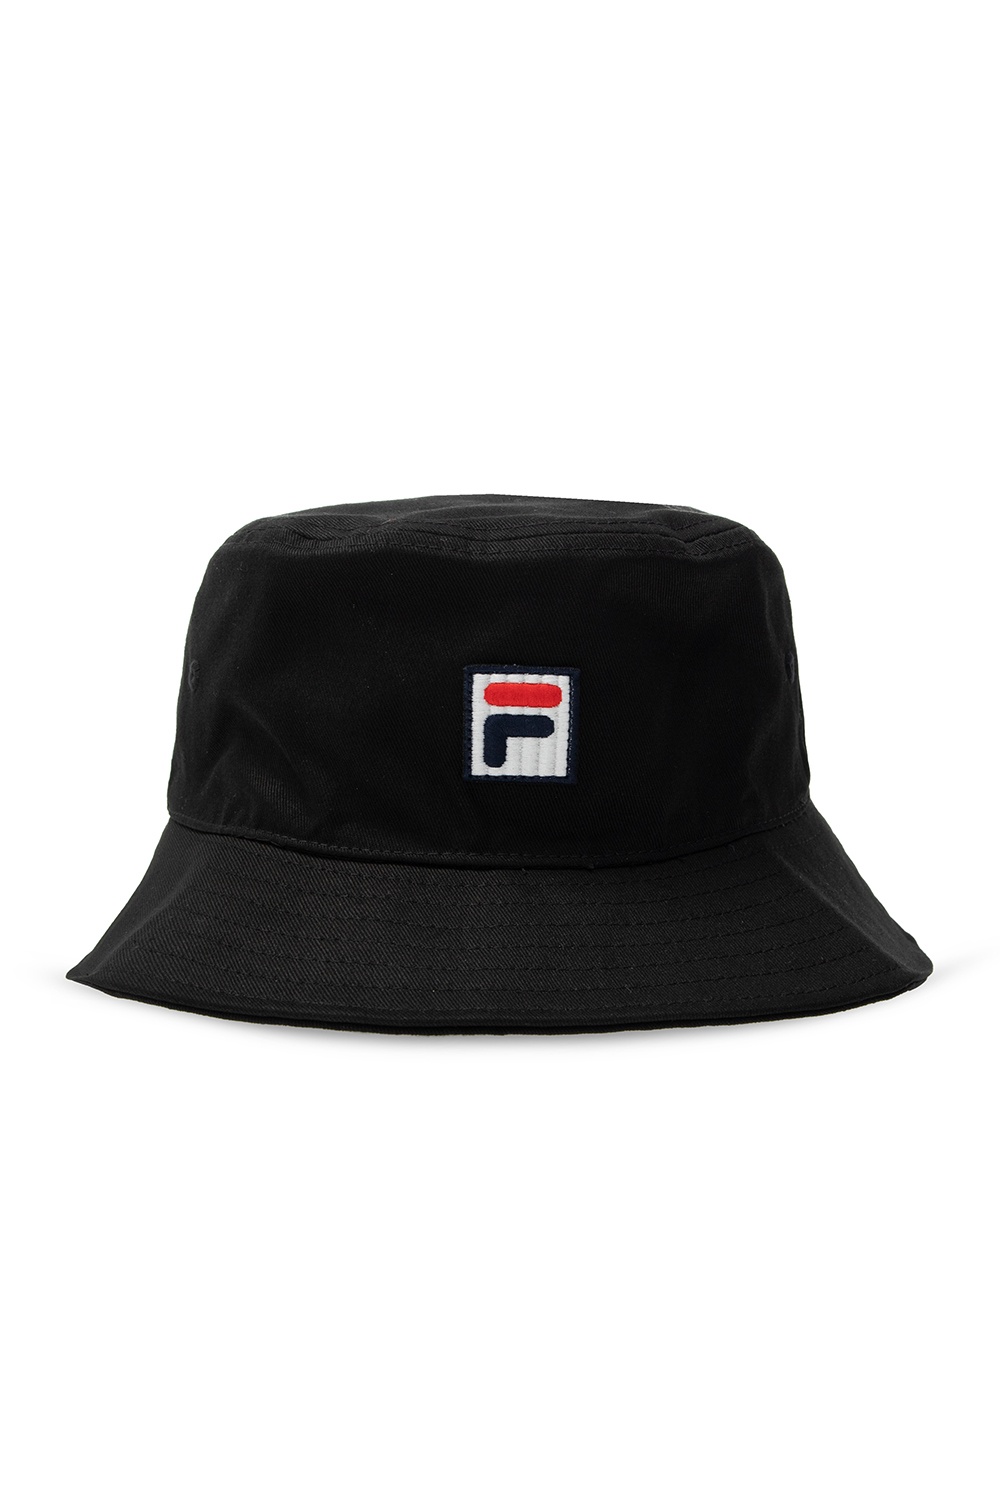 Hat with logo Fila US